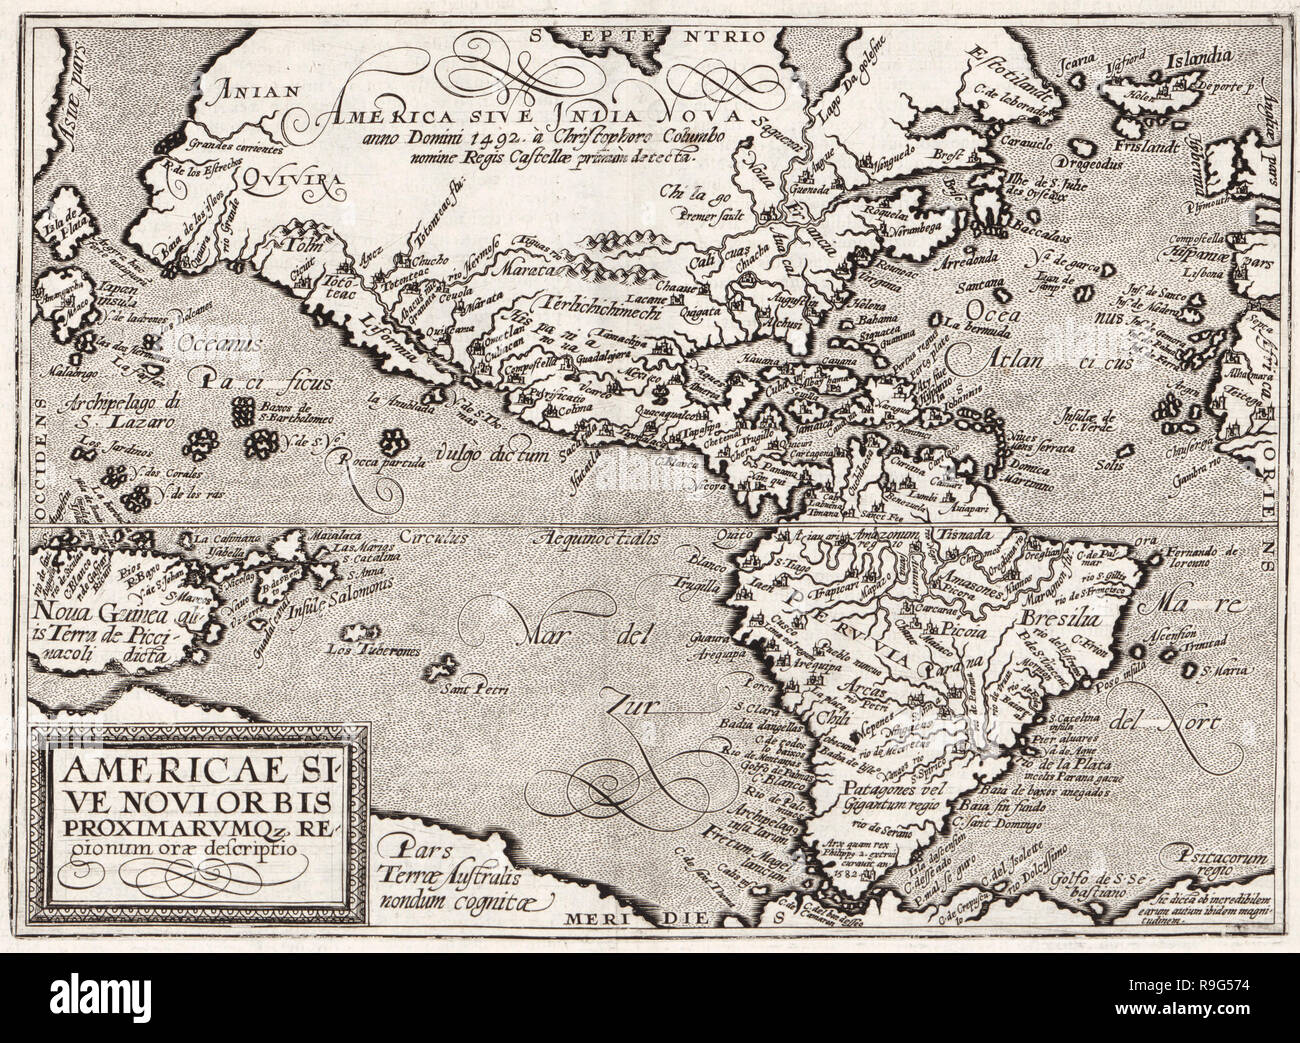 Americae sive novi orbis proxima regionum orae descriptio - America regions near the coast description - Map, circa 1602 Stock Photo